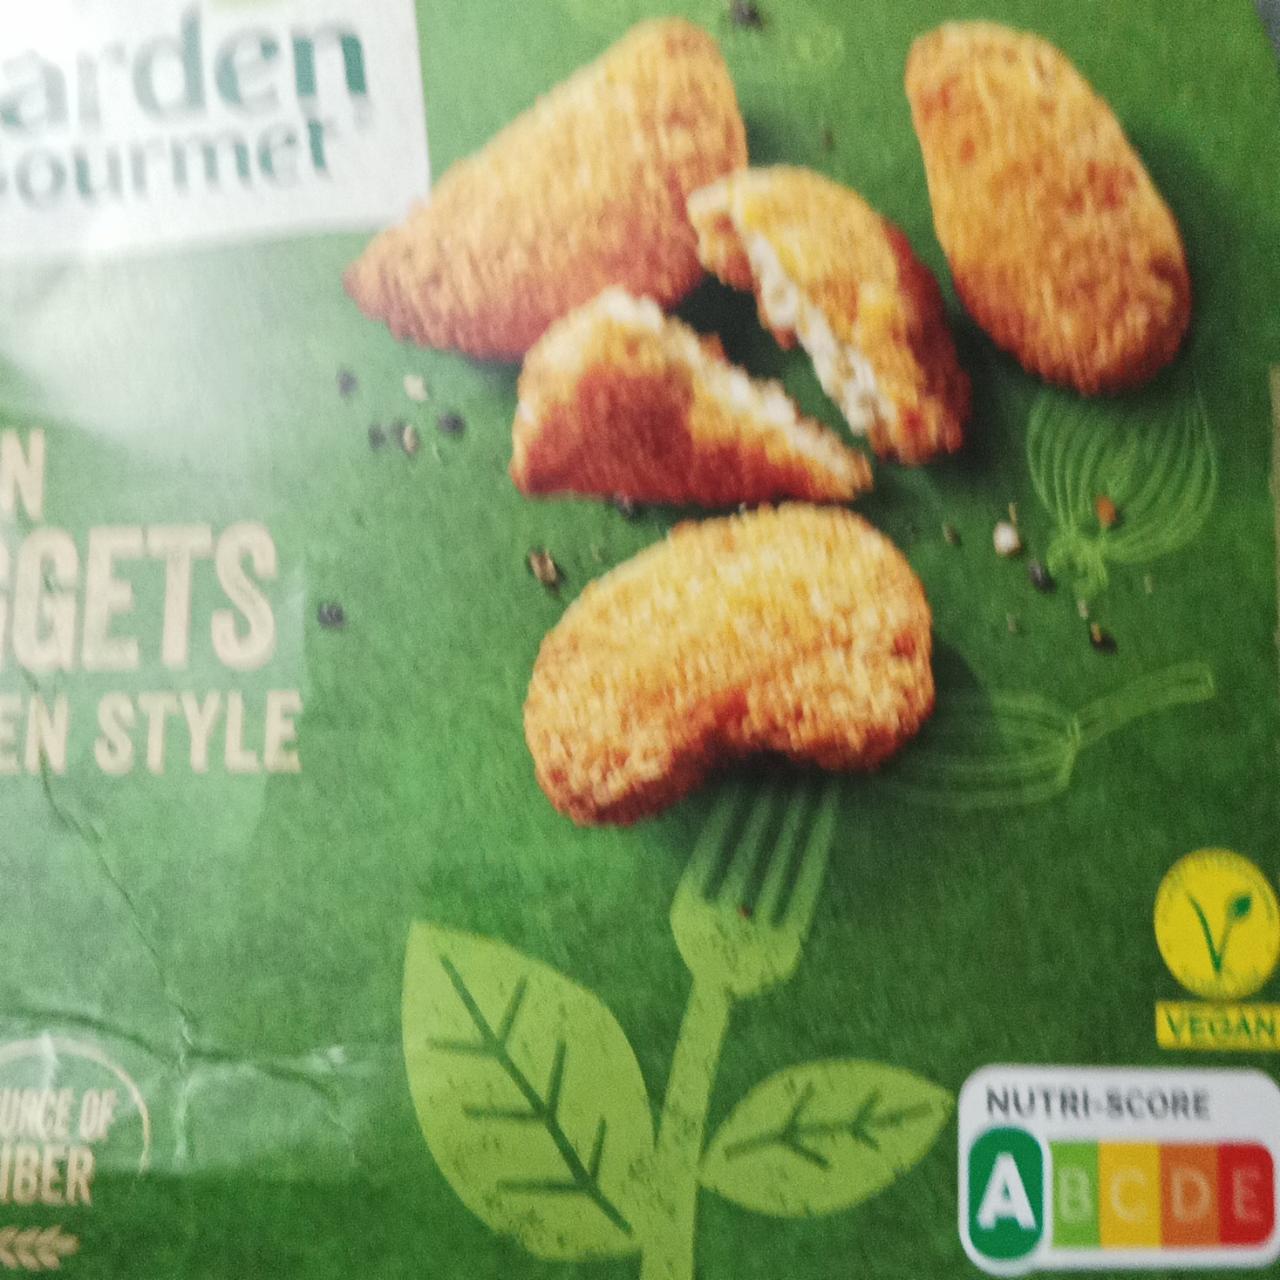 Zdjęcia - Vegan nuggets chicken Garden Gourmet